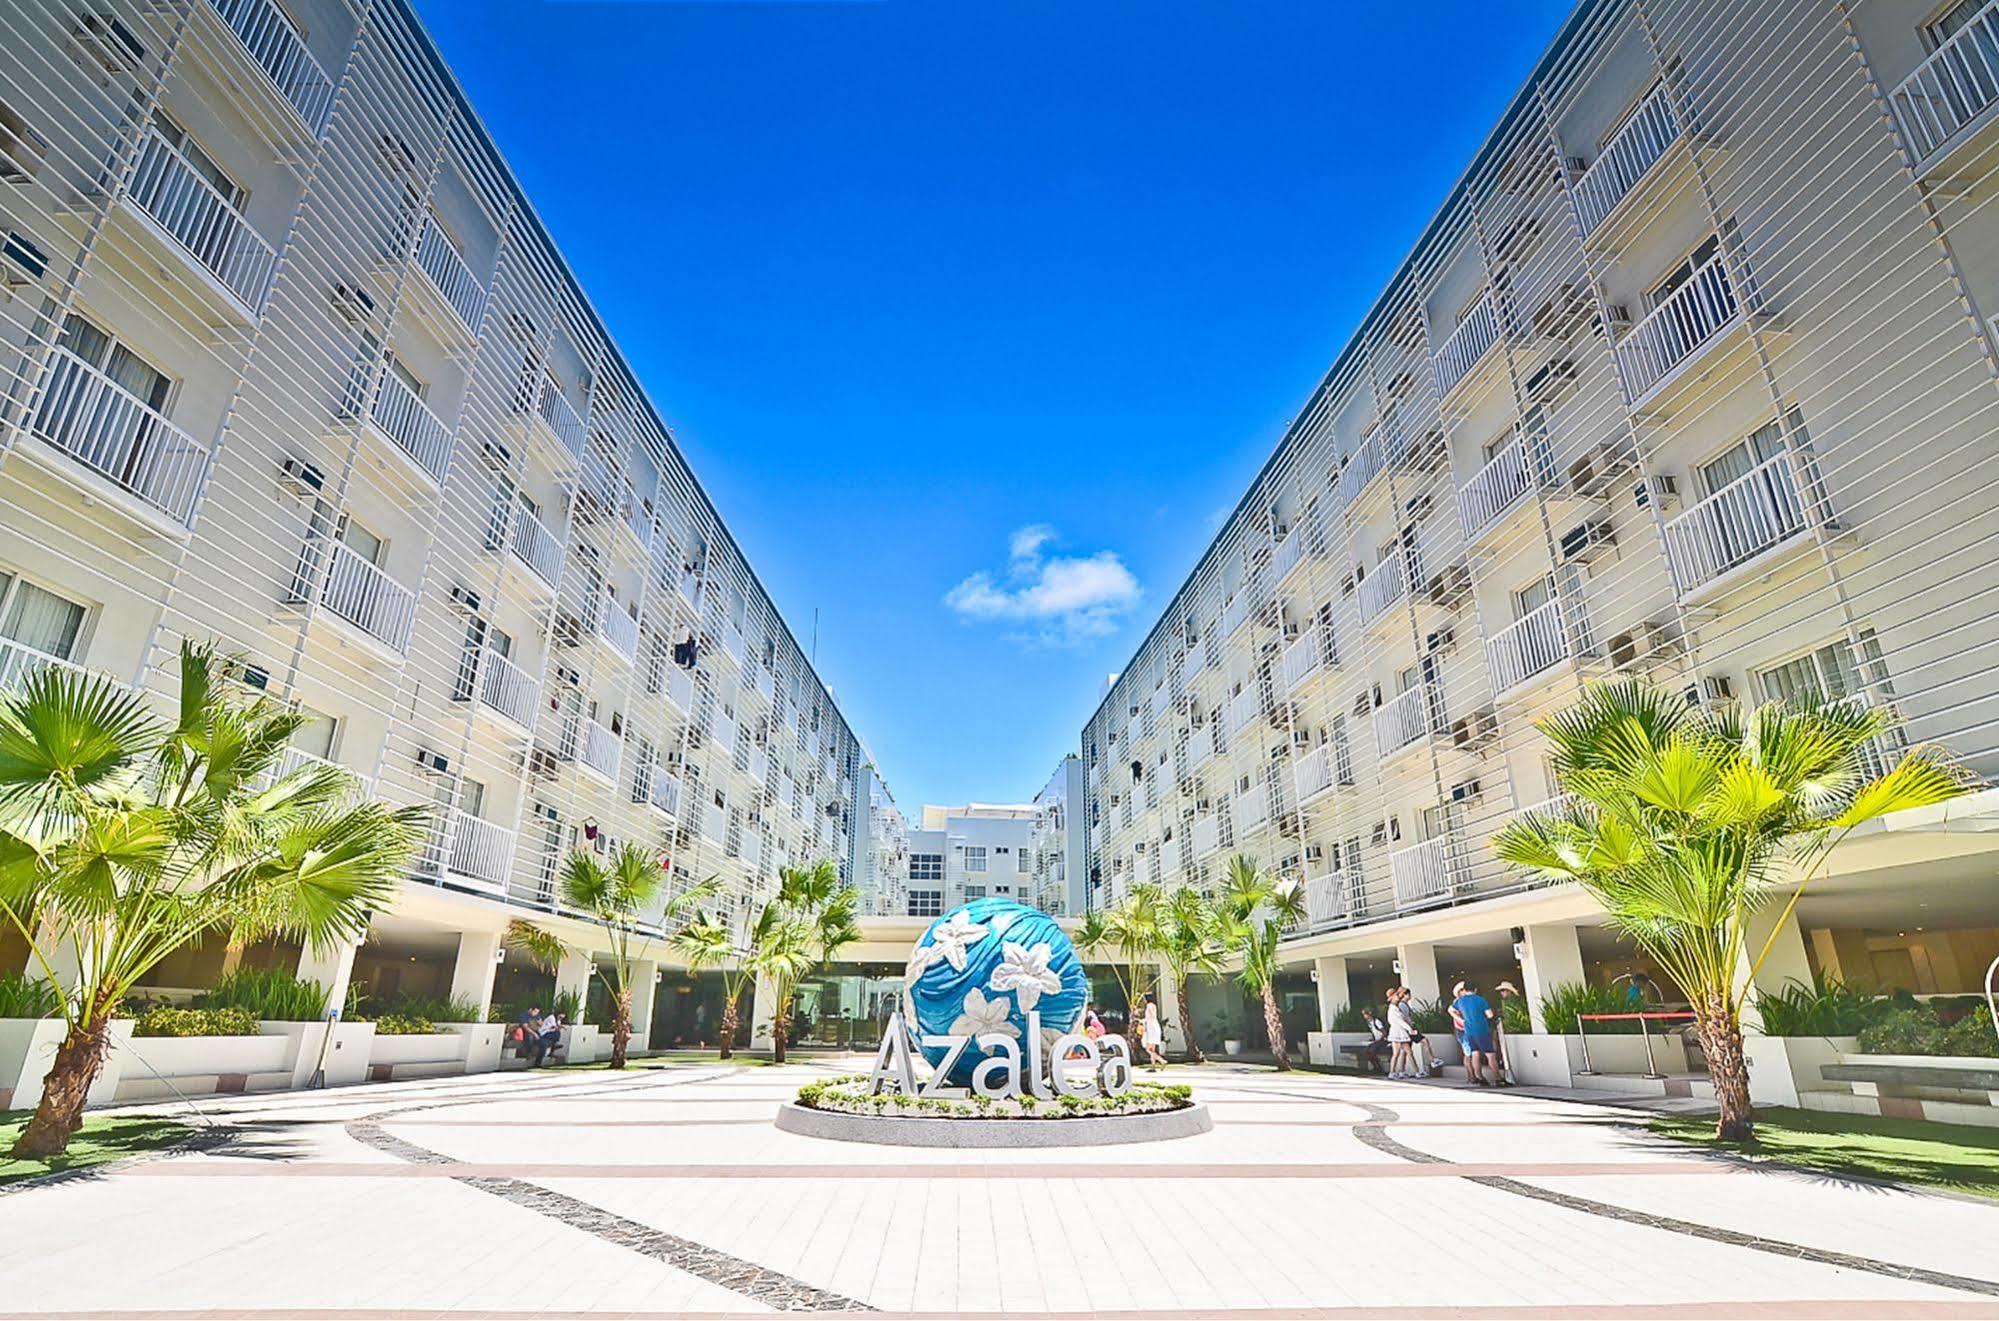 Azalea Hotels & Residences Boracay Balabag  Exterior photo